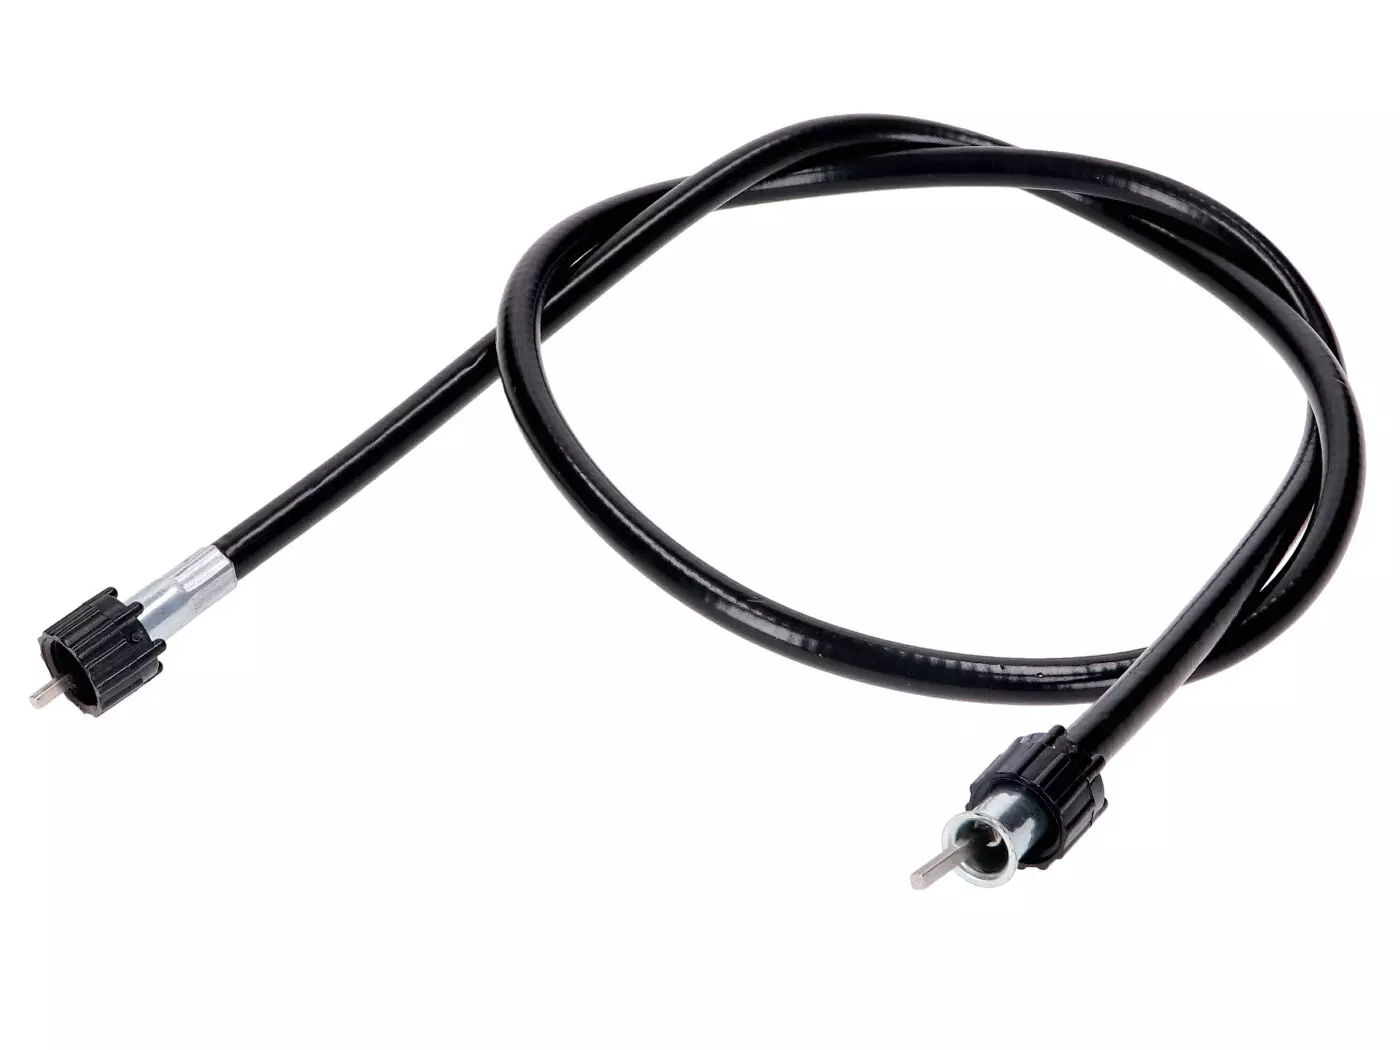 Tachometer Cable 700mm For Simson S51, S70, Enduro, KR51/1, KR51/2 Schwalbe, SR4-1, SR4-2, SR4-3, SR4-4